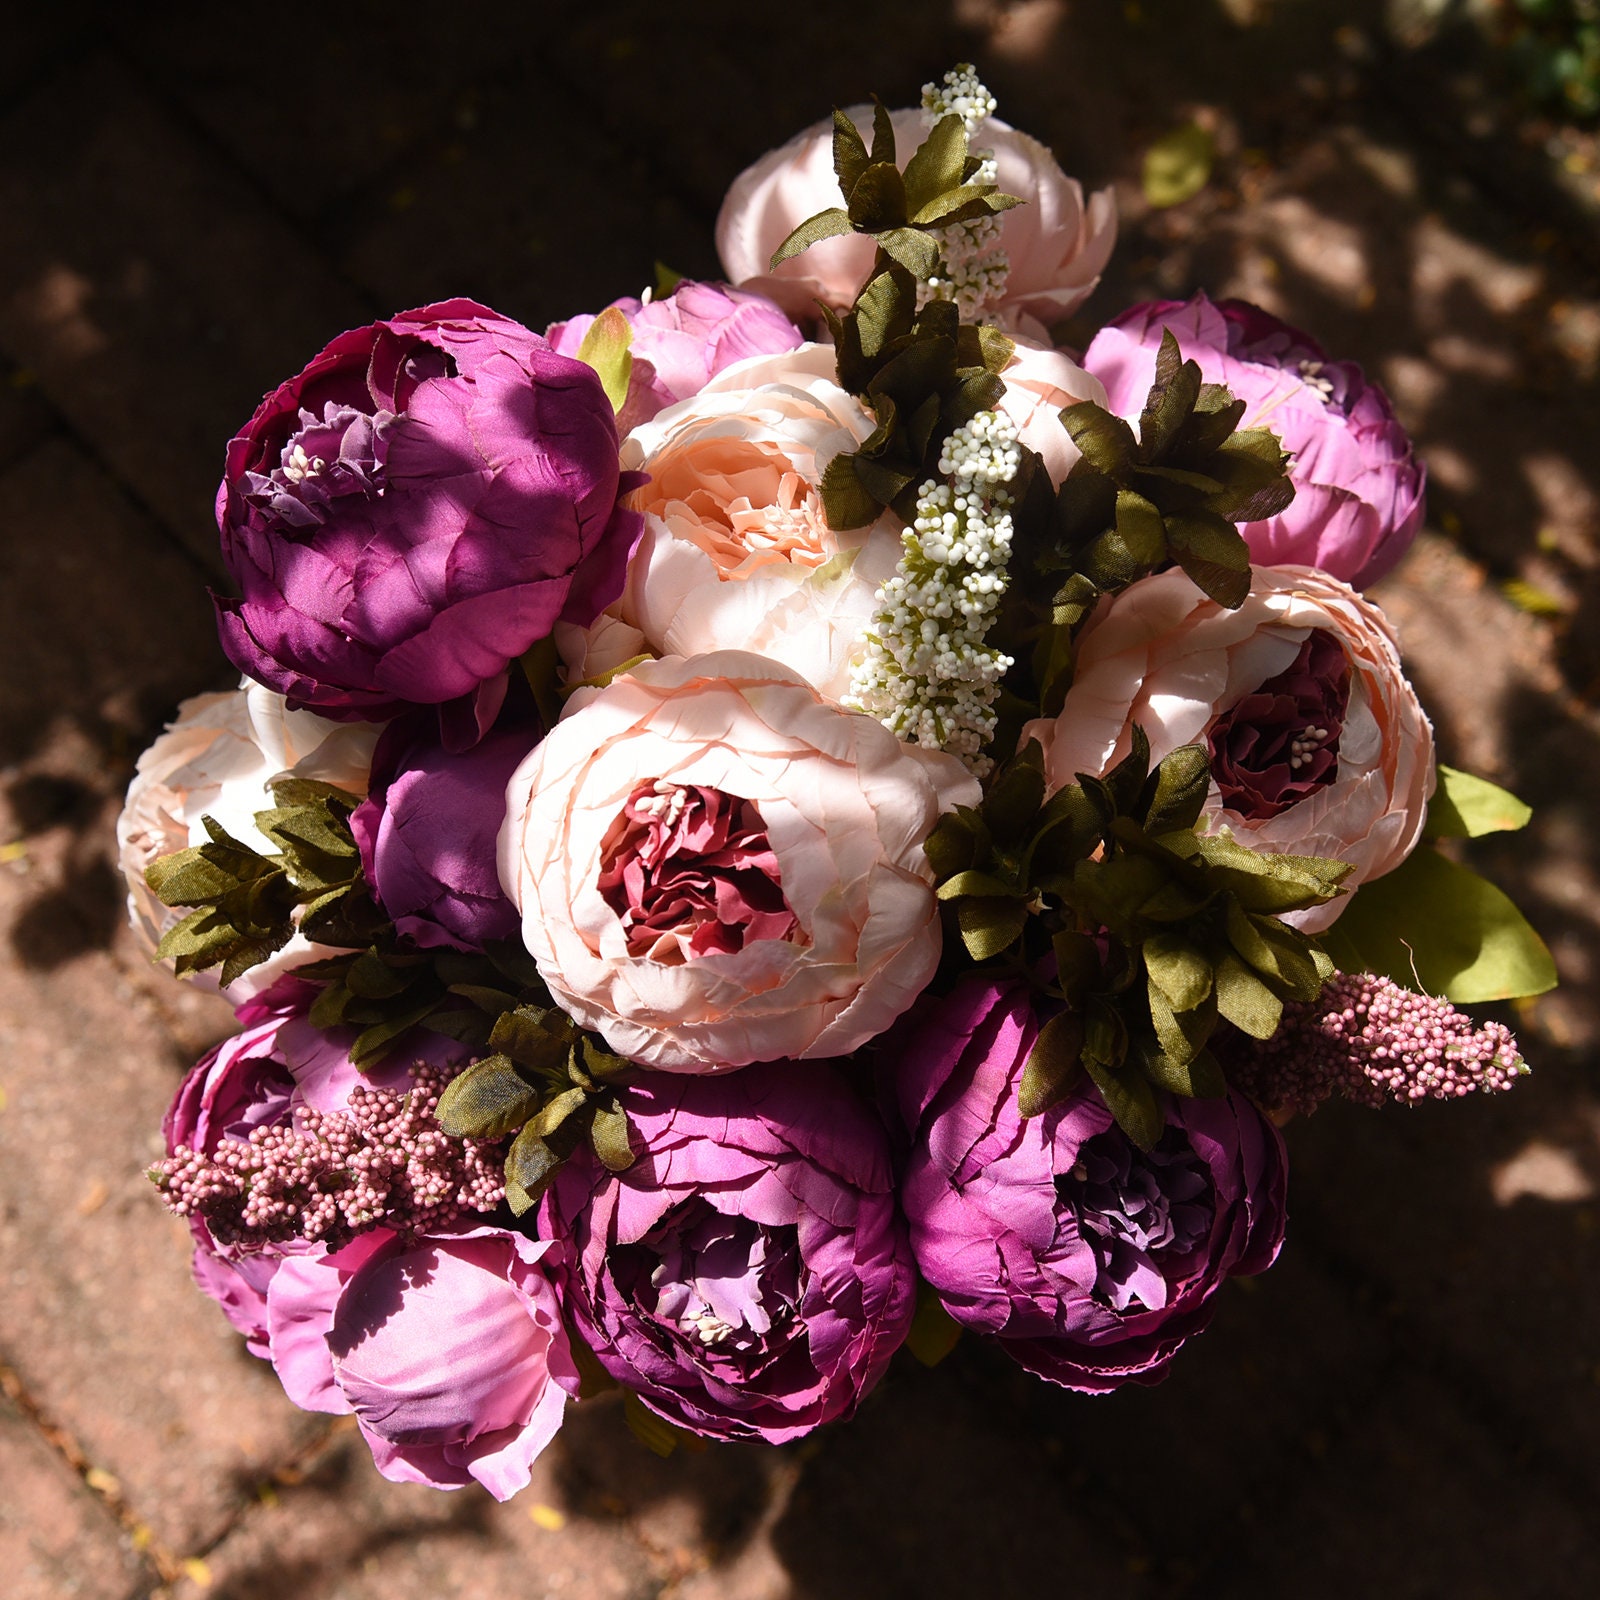 Versatile Artificial Holly Red Berry Stems: Set of 10 for Stunning Decor  Fiveseasonstuff Floral 